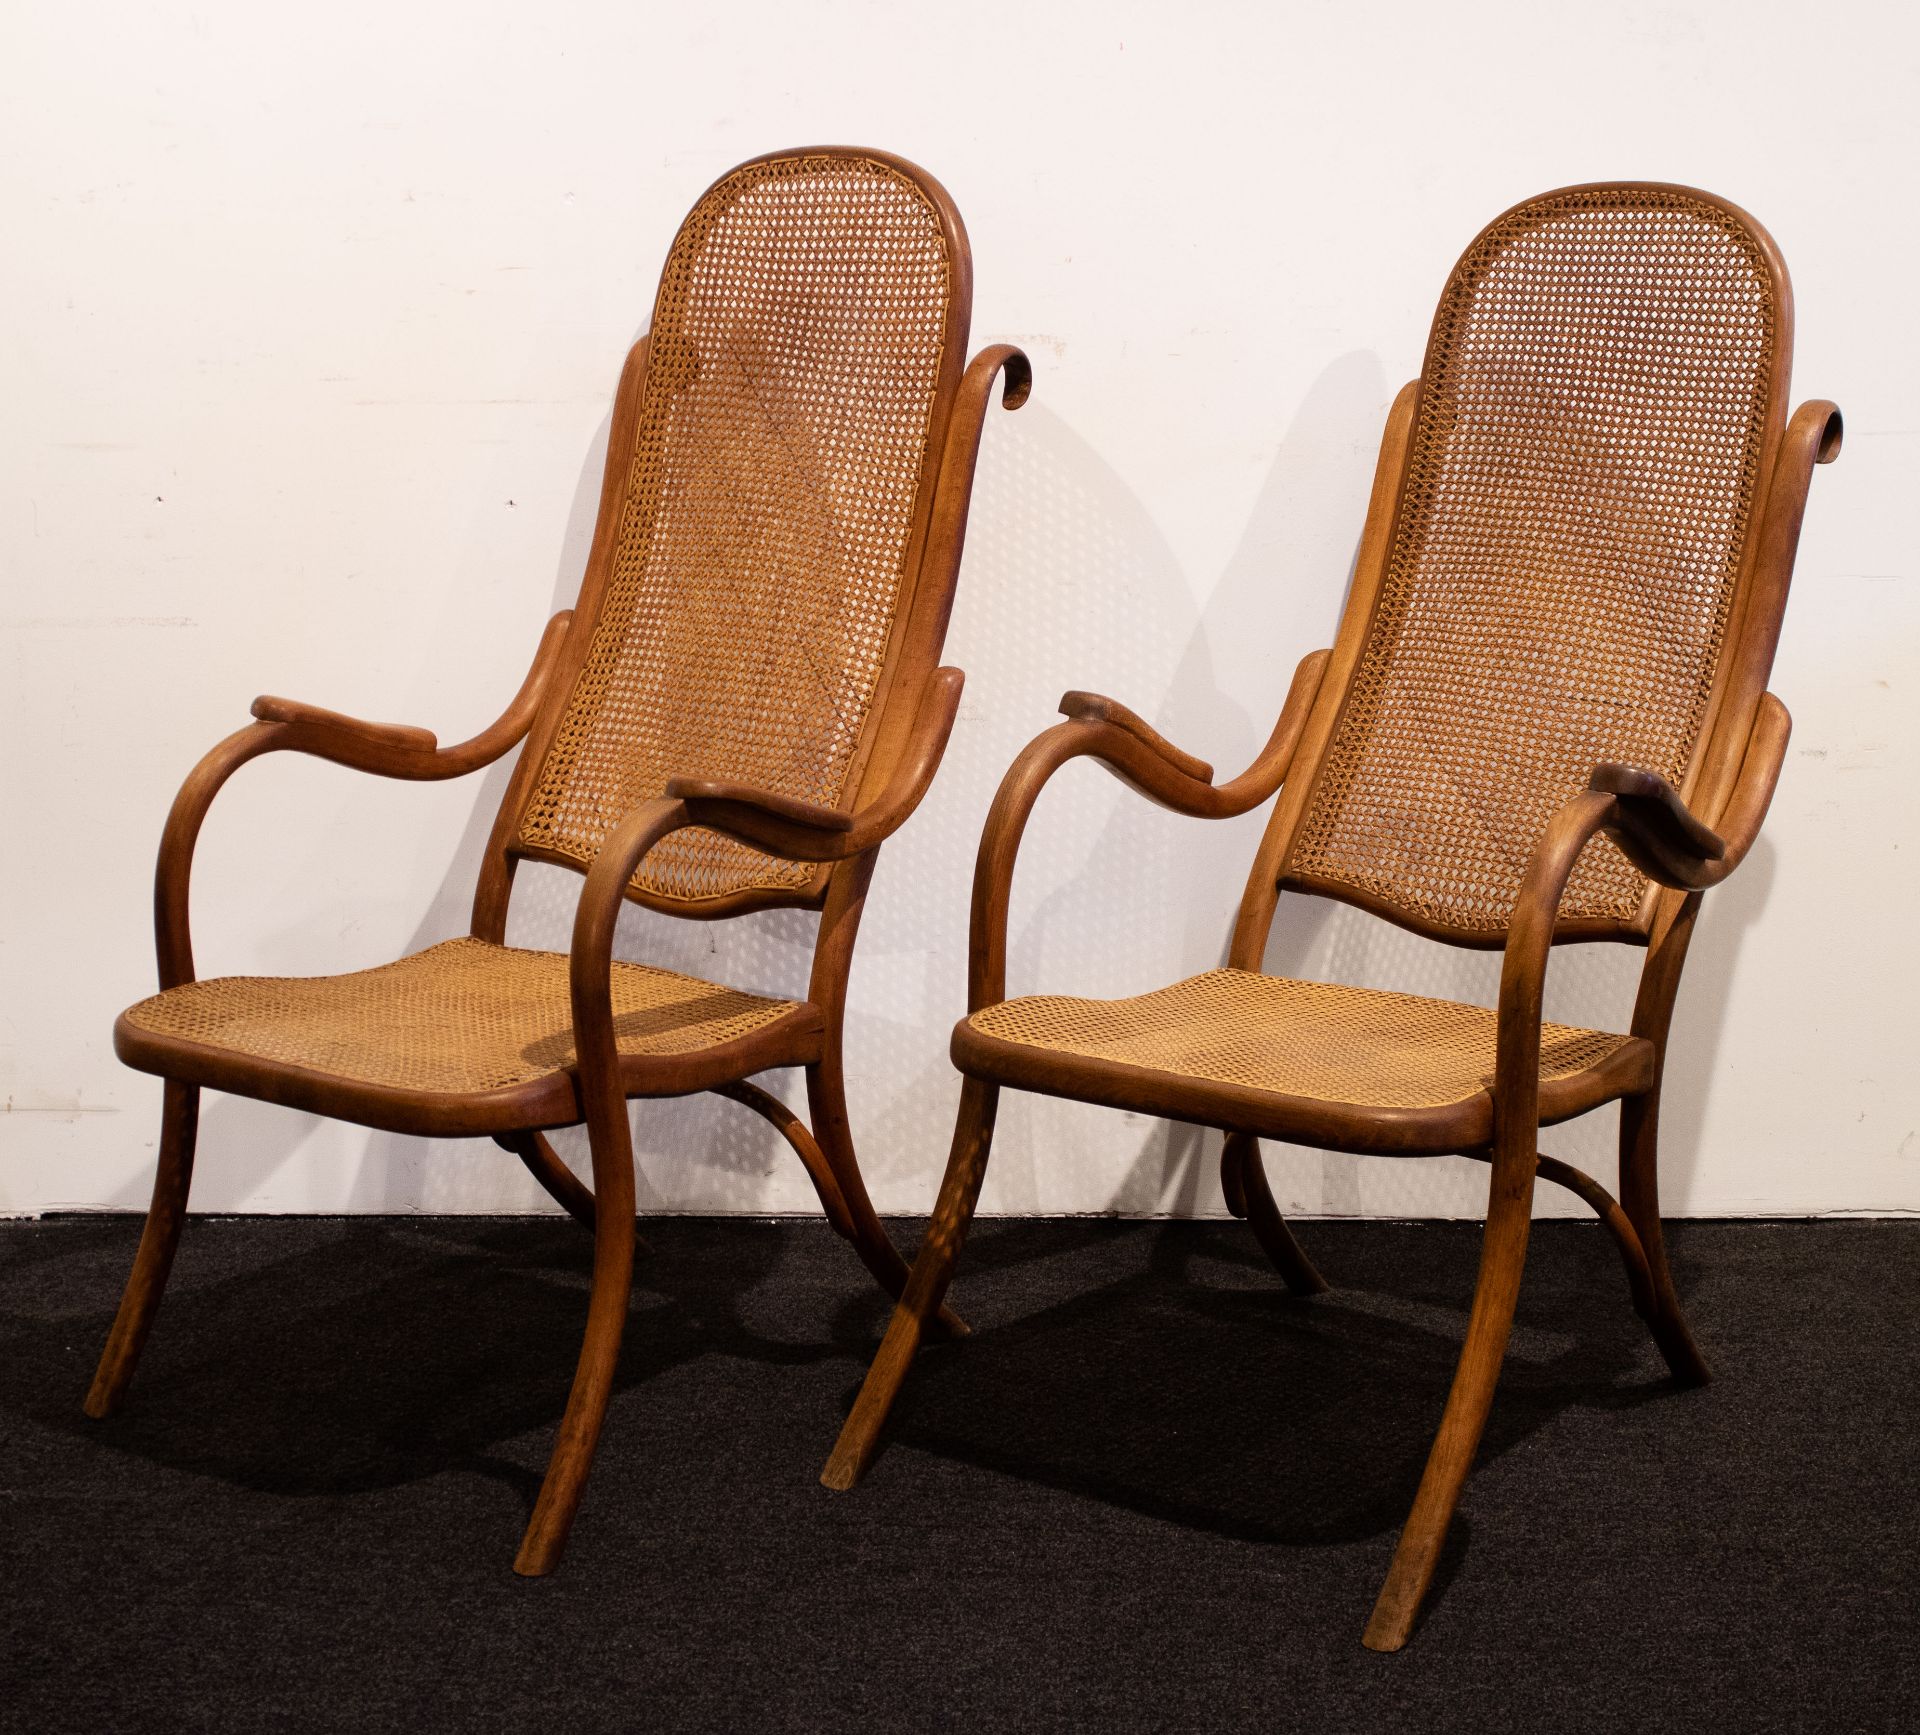 2 original Thonet armchairs